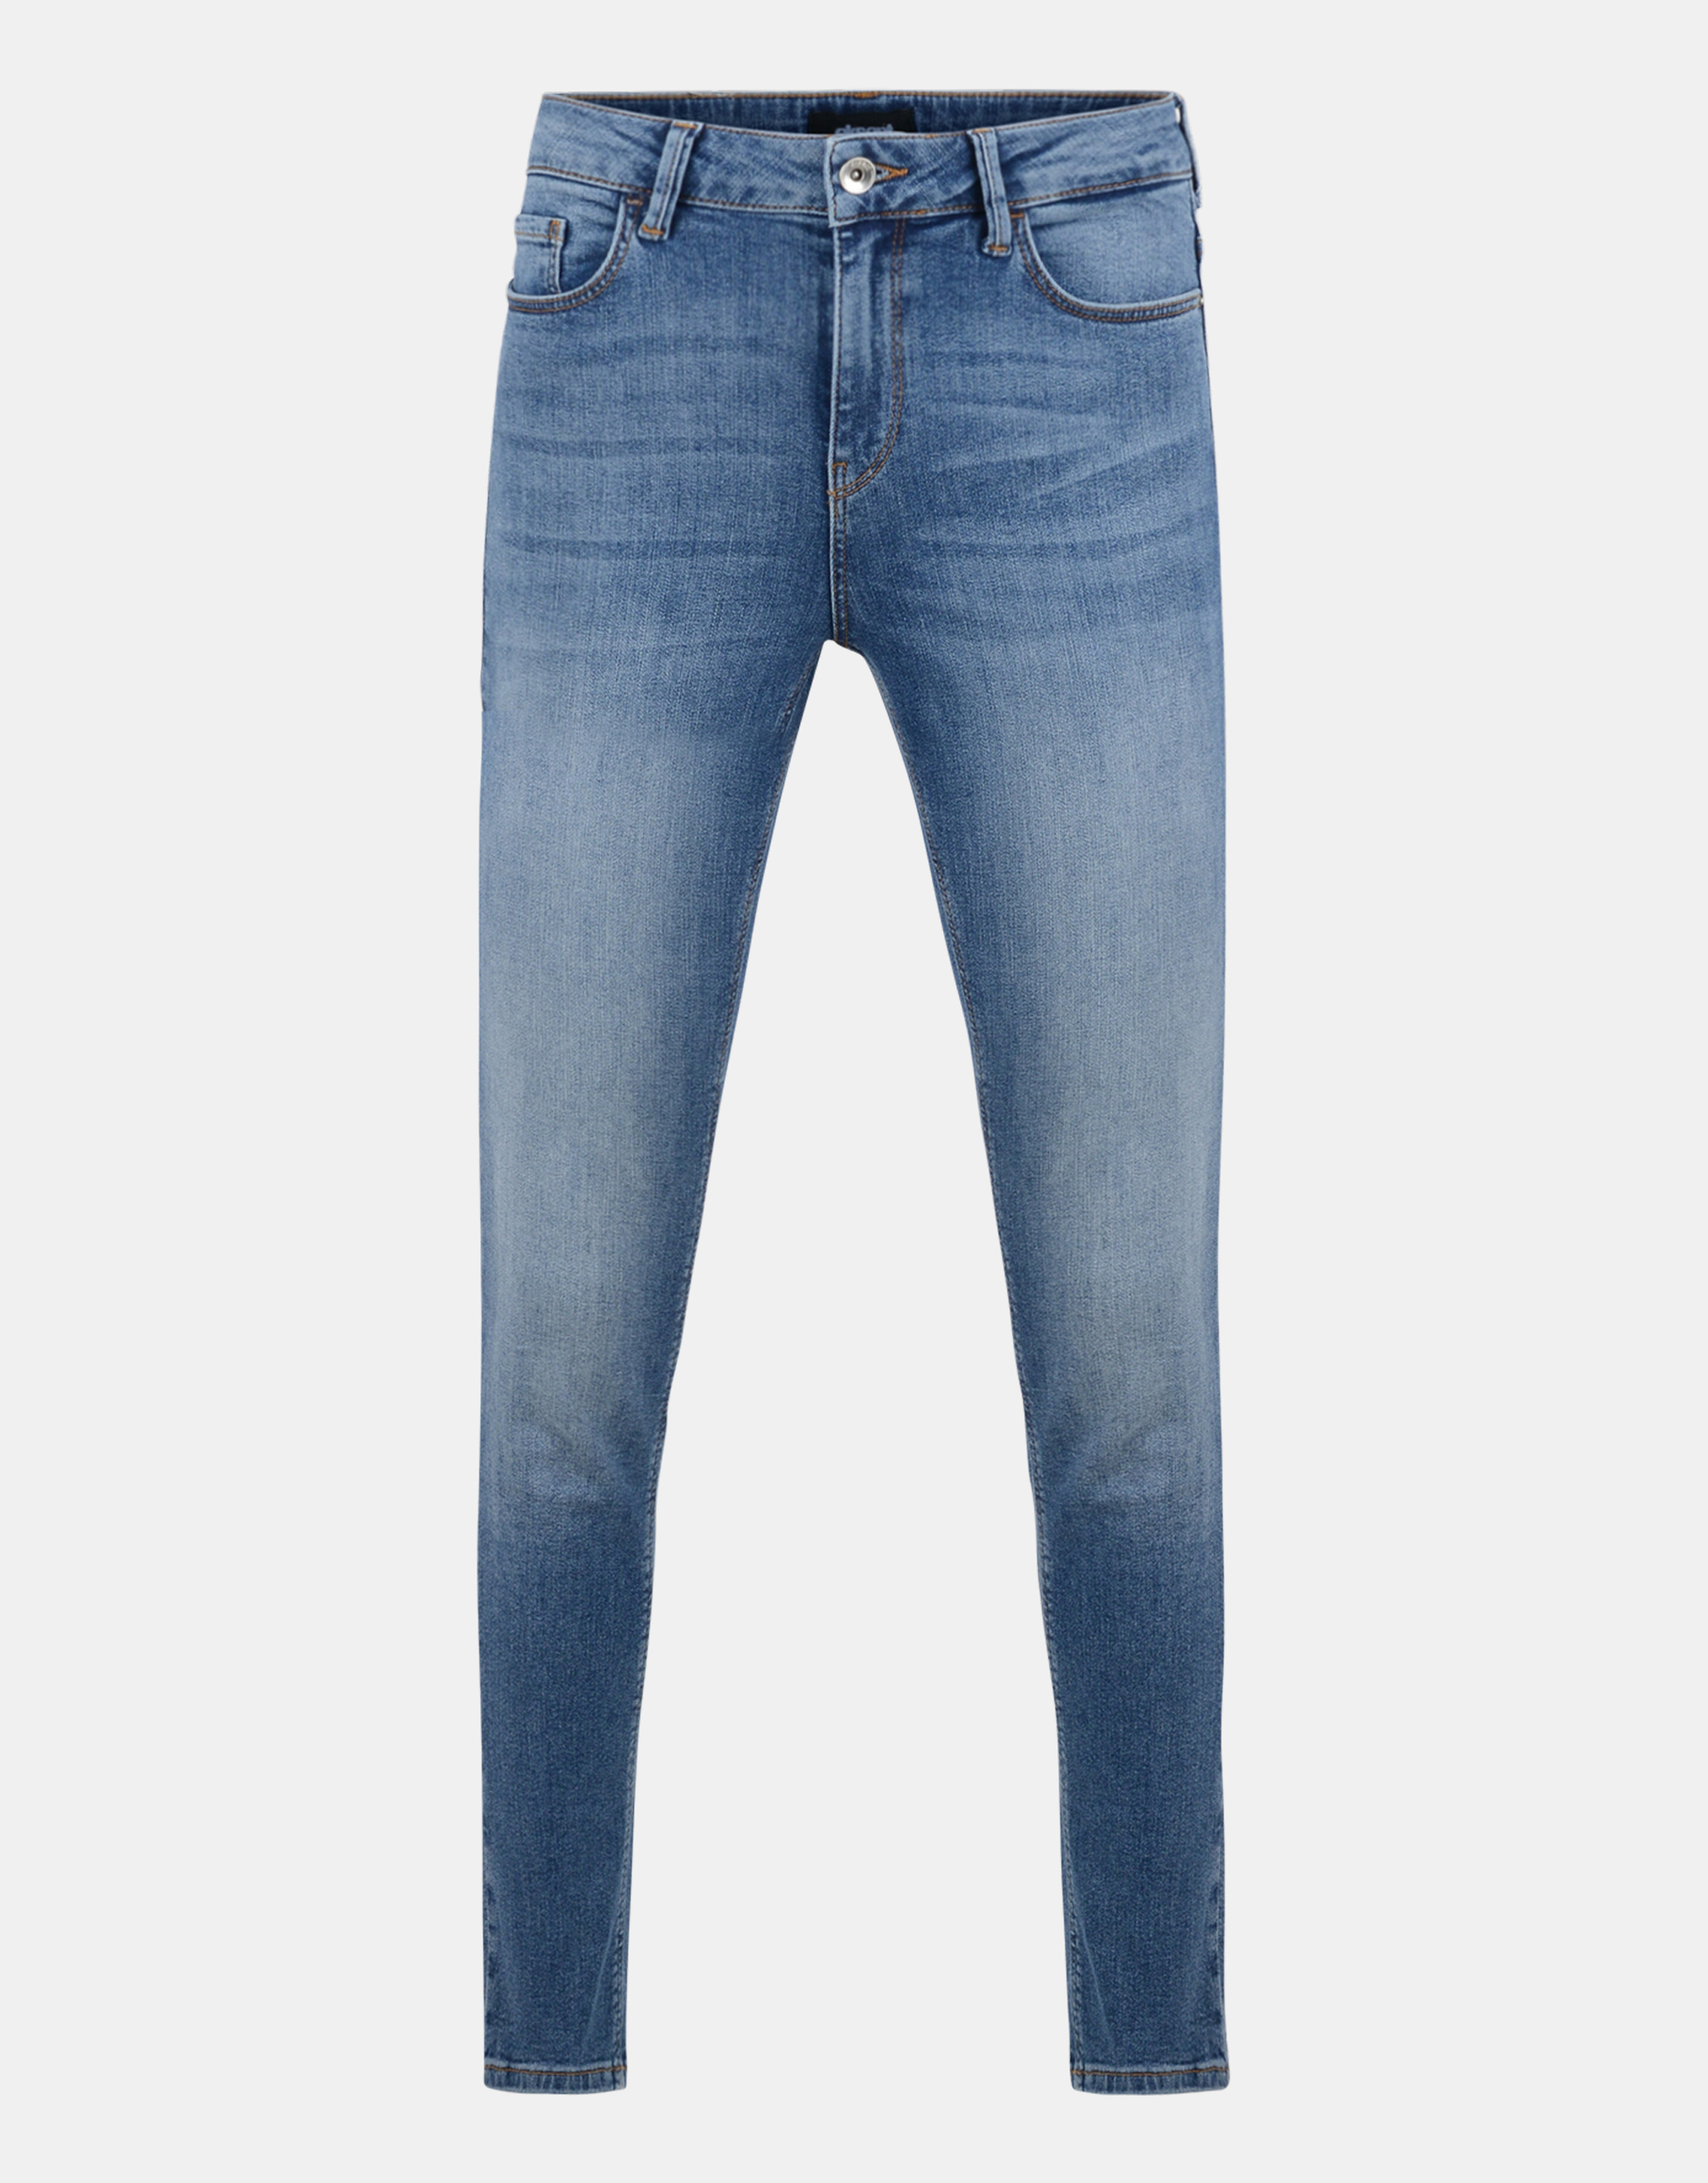 Skinny Jeans Mediumstone L30 EKSEPT